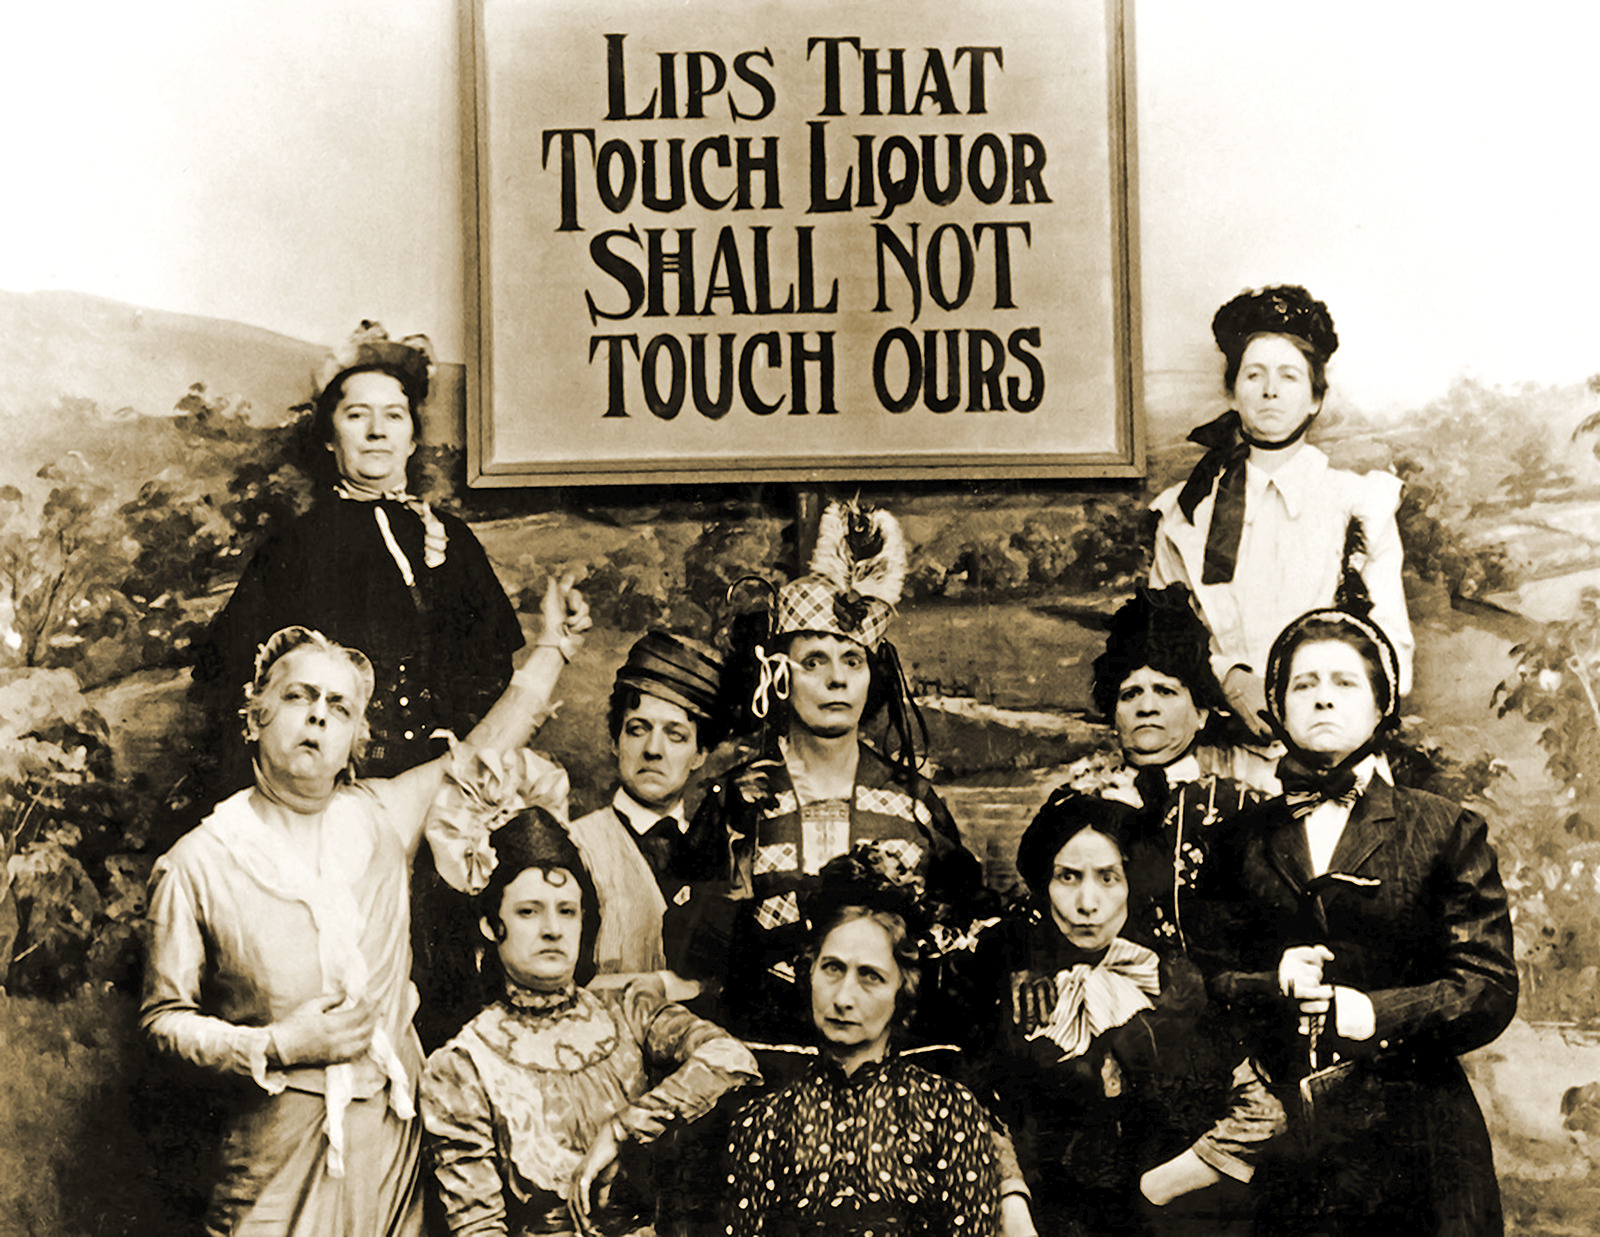 1901 Lips That Touch Liquor Prohibition Vintage Old Photo drunk 8 x 10 Reprint